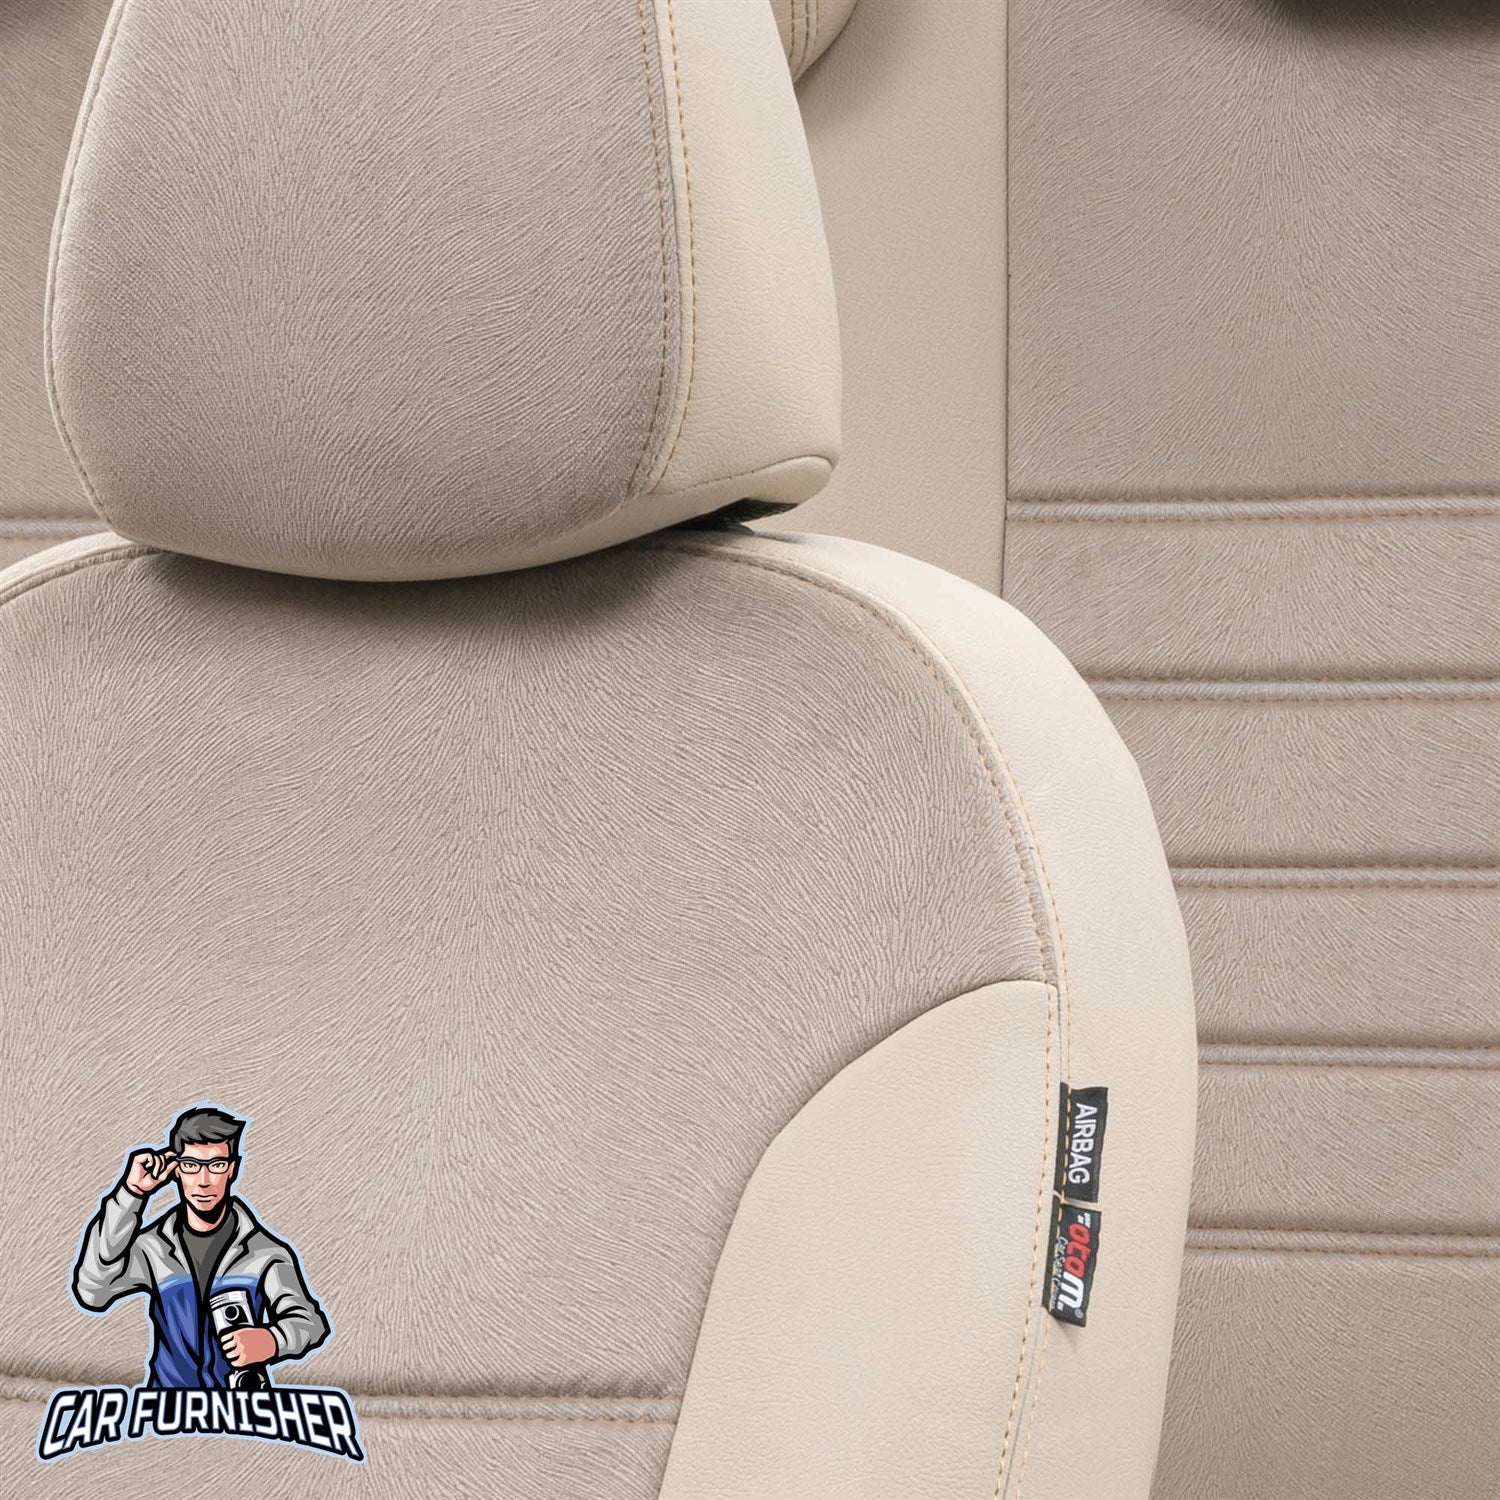 Volvo V50 Car Seat Cover 2004-2012 MW/T5 London Design Beige Full Set (5 Seats + Handrest) Leather & Fabric